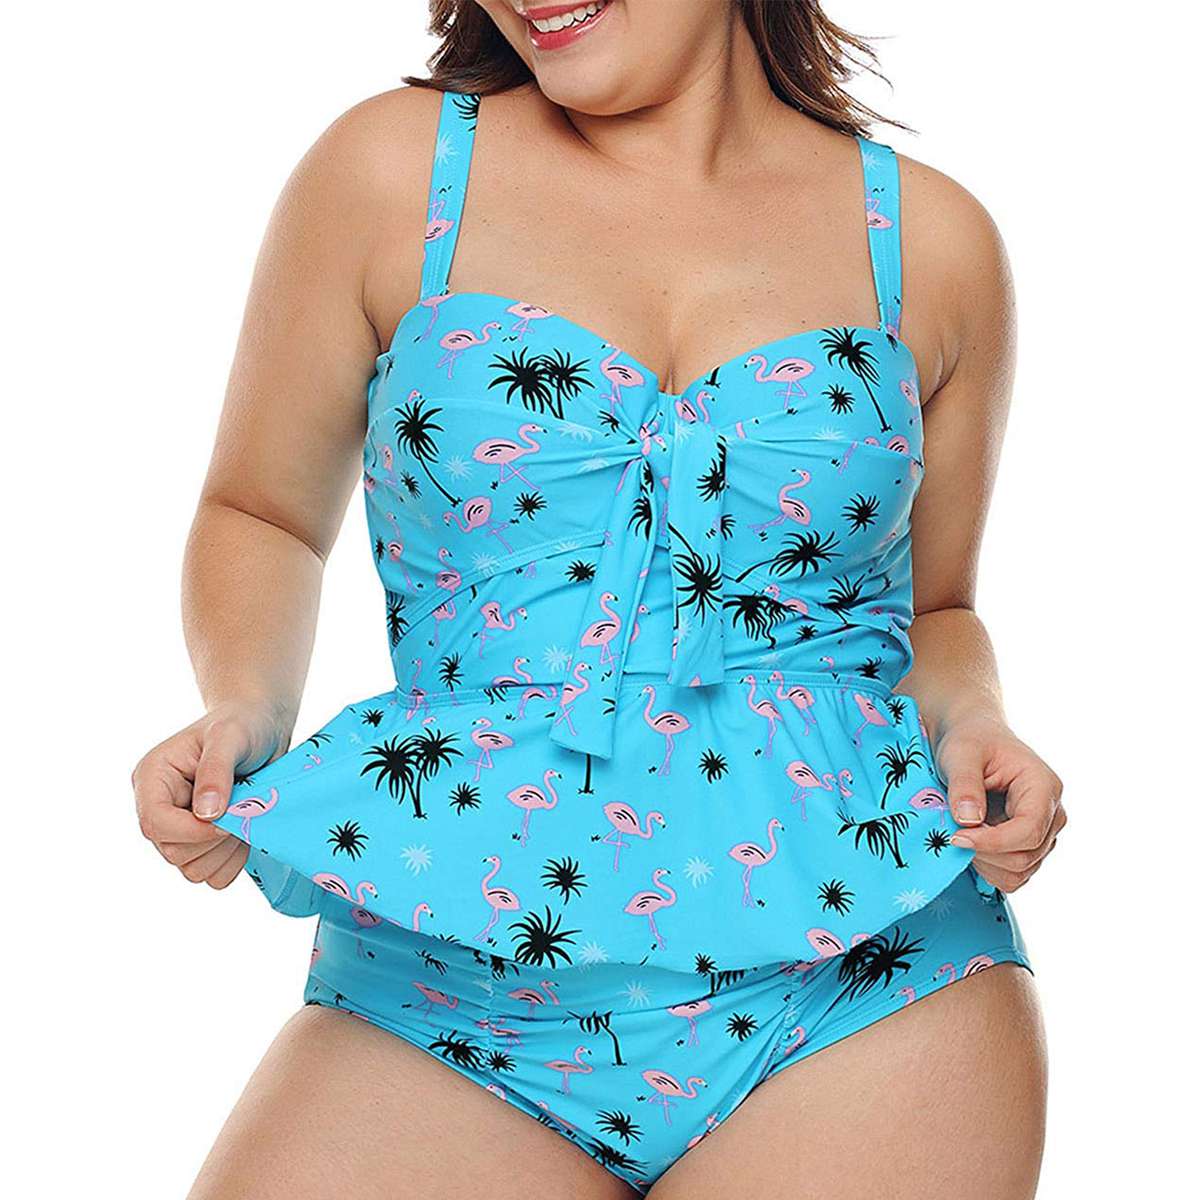 CDERFV Plus Size Swimwear One Piece Swimsuit Swimming Suit for Women Stitching Knit Printing Bikini Bathing Suit 